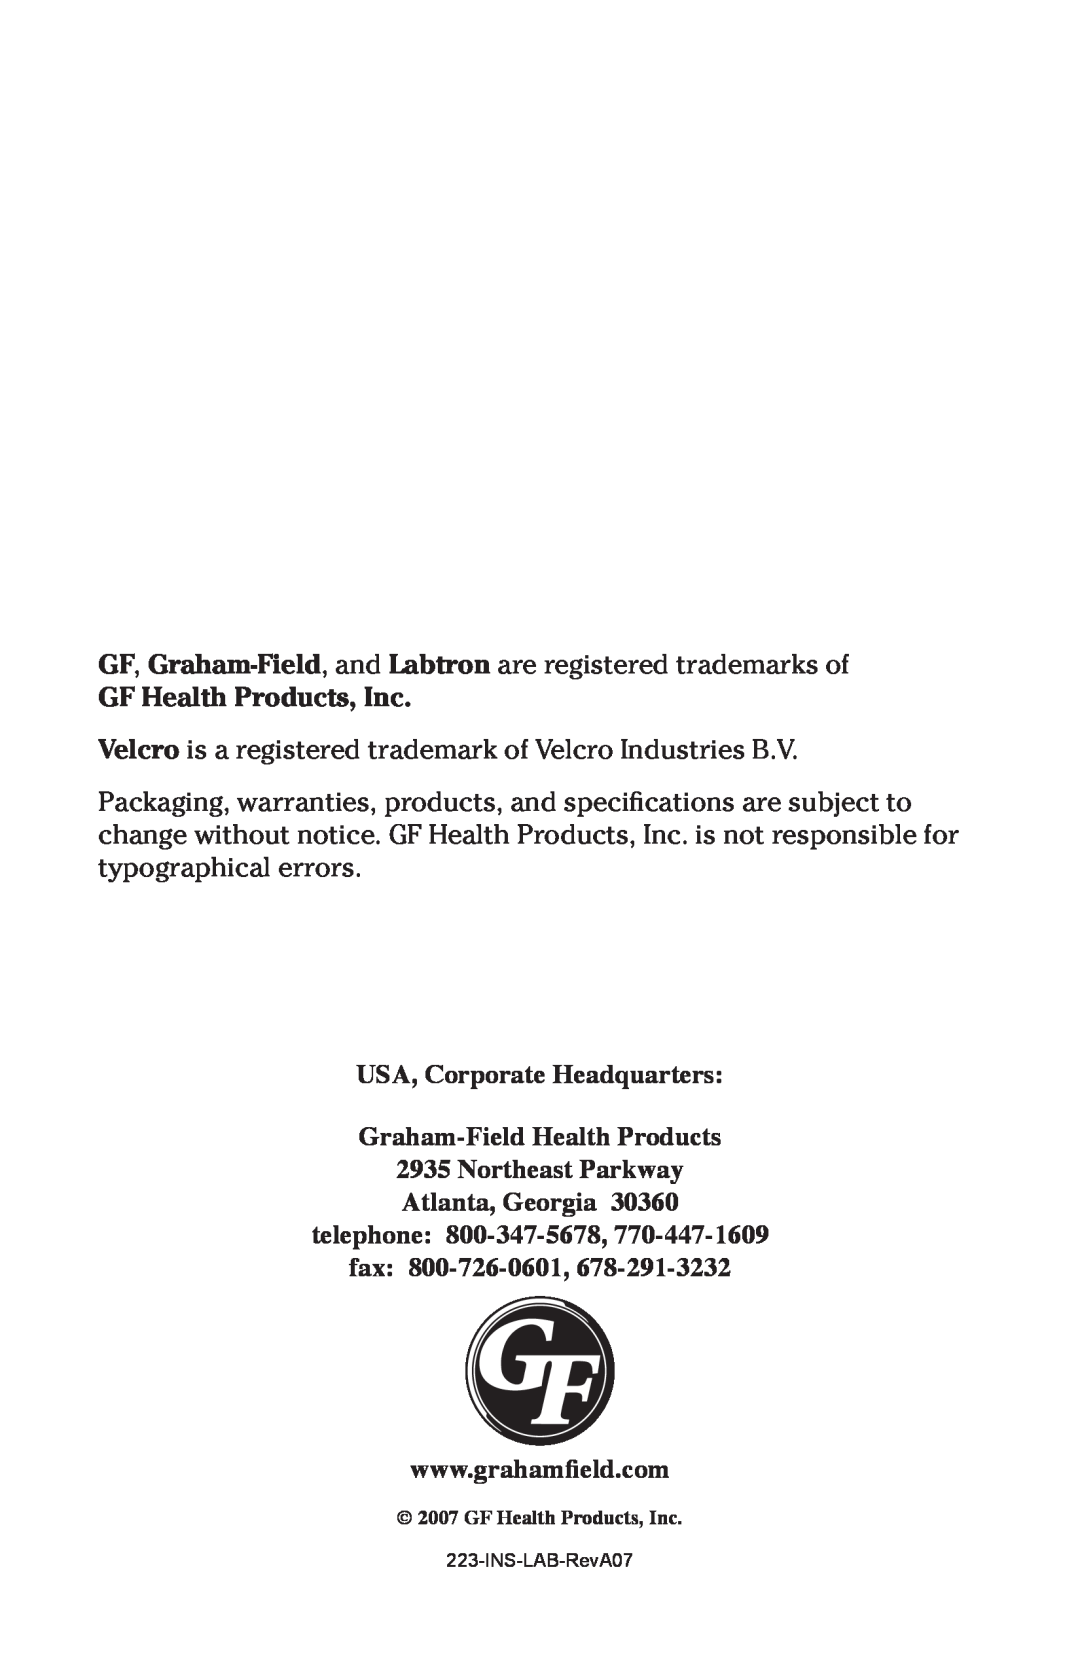 Graham Field V223 GF Health Products, Inc, USA, Corporate Headquarters Graham-Field Health Products, fax 800-726-0601 